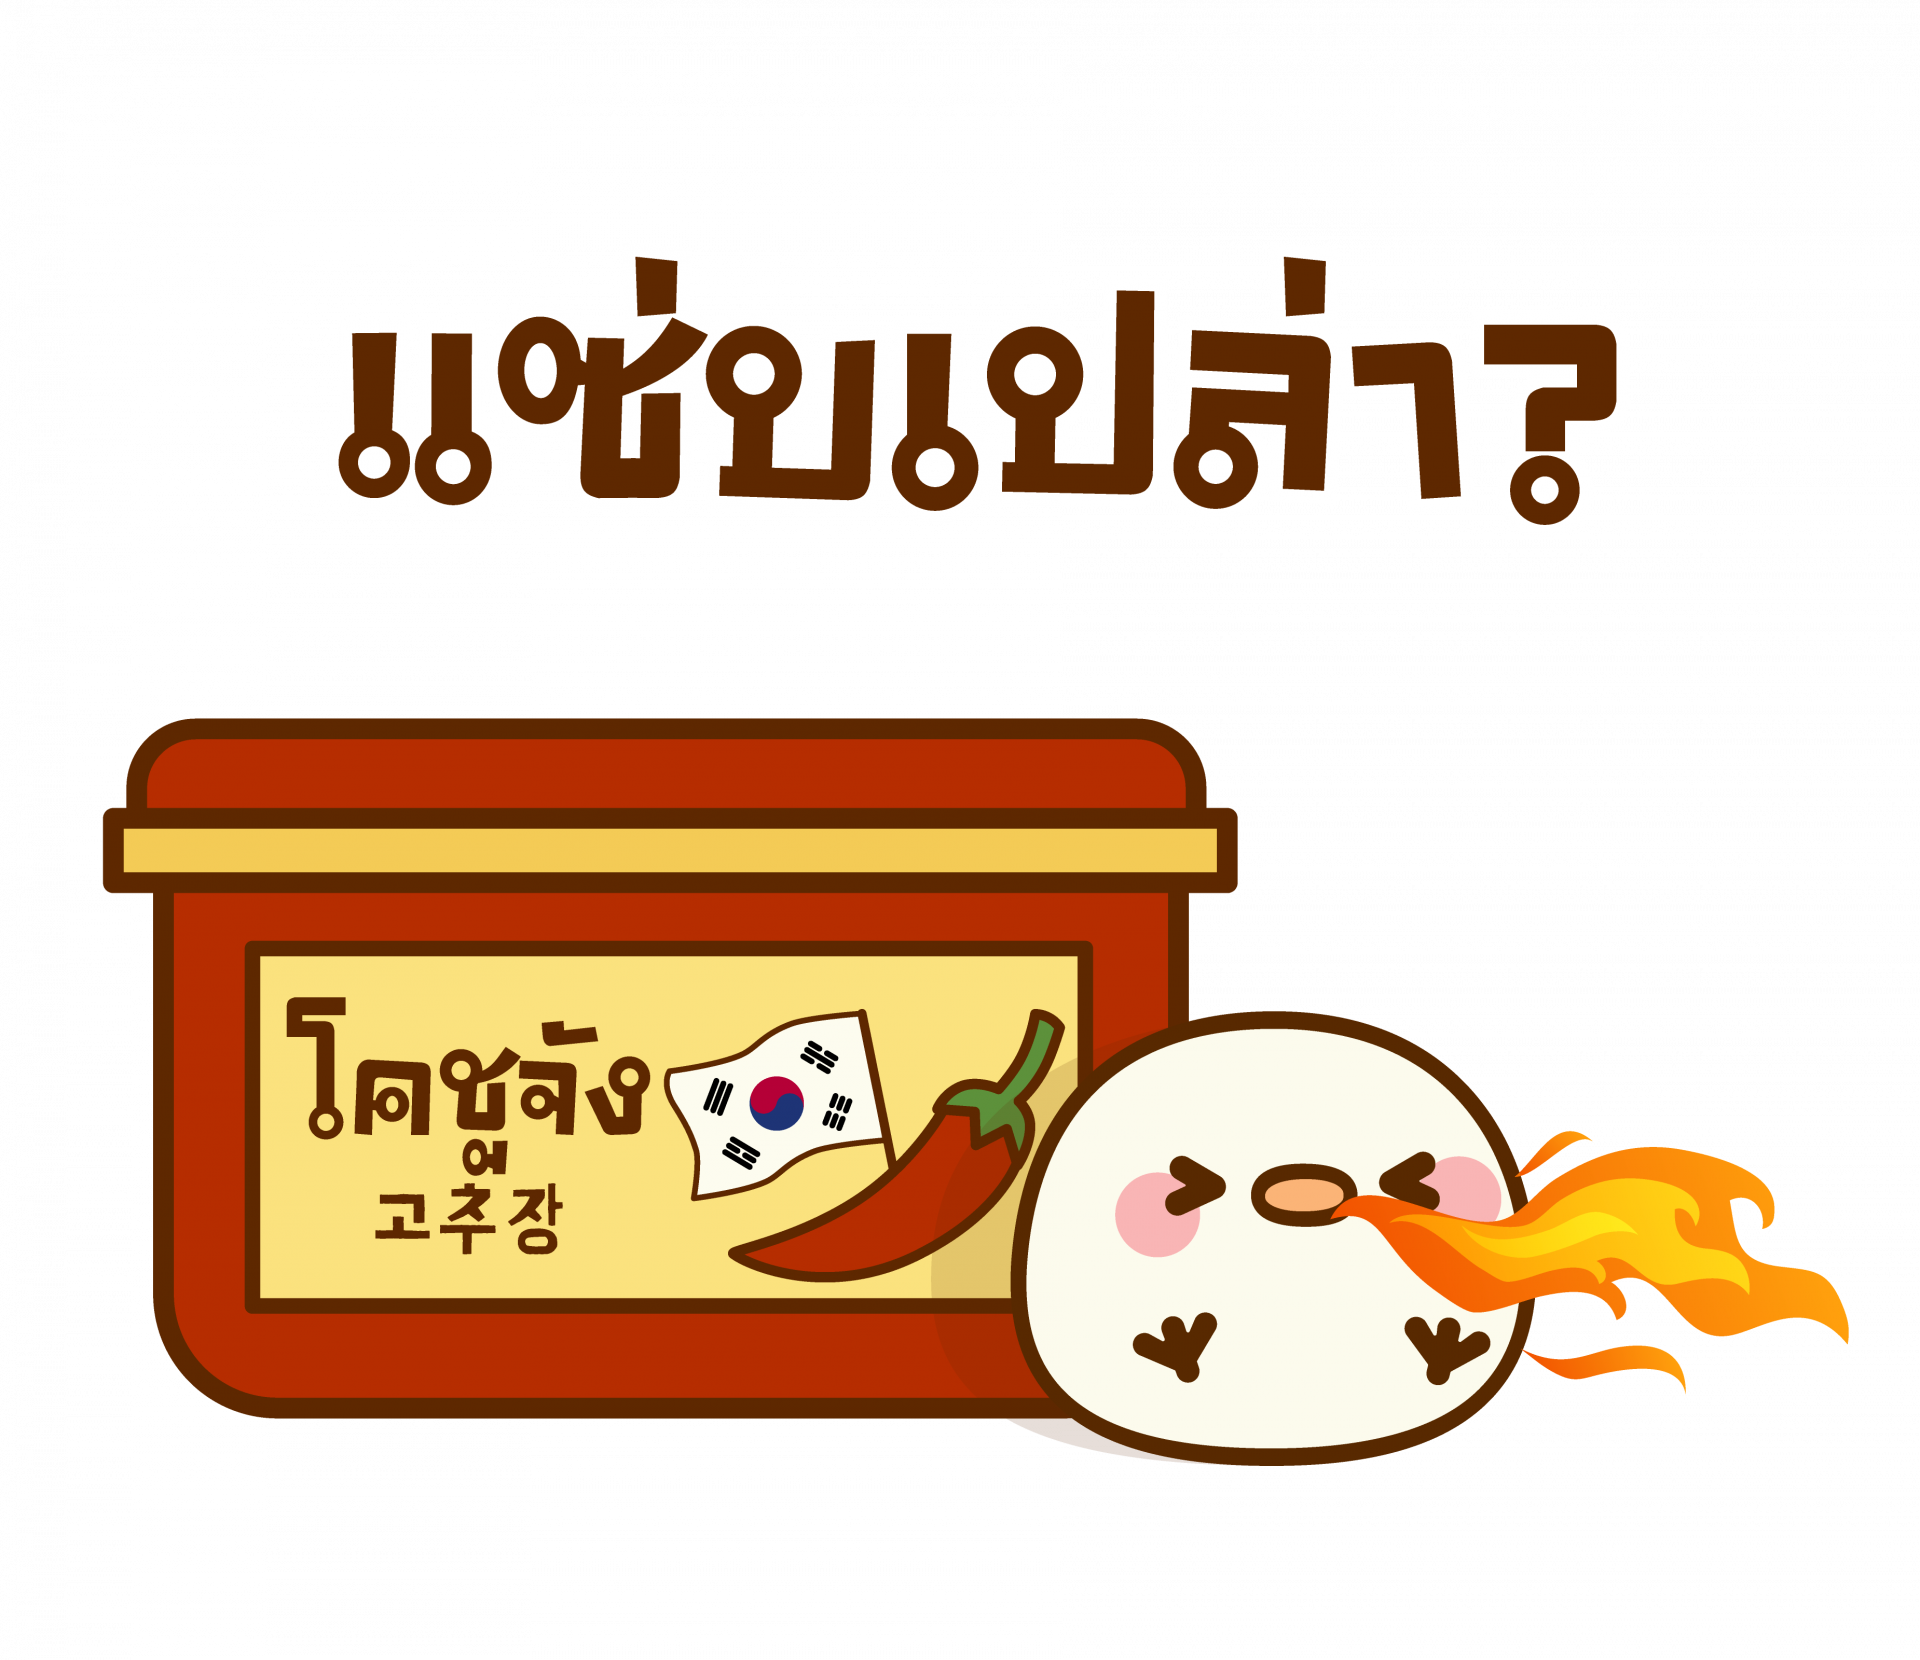 2021 Enjoy K Food Line Sticker Promotion Project